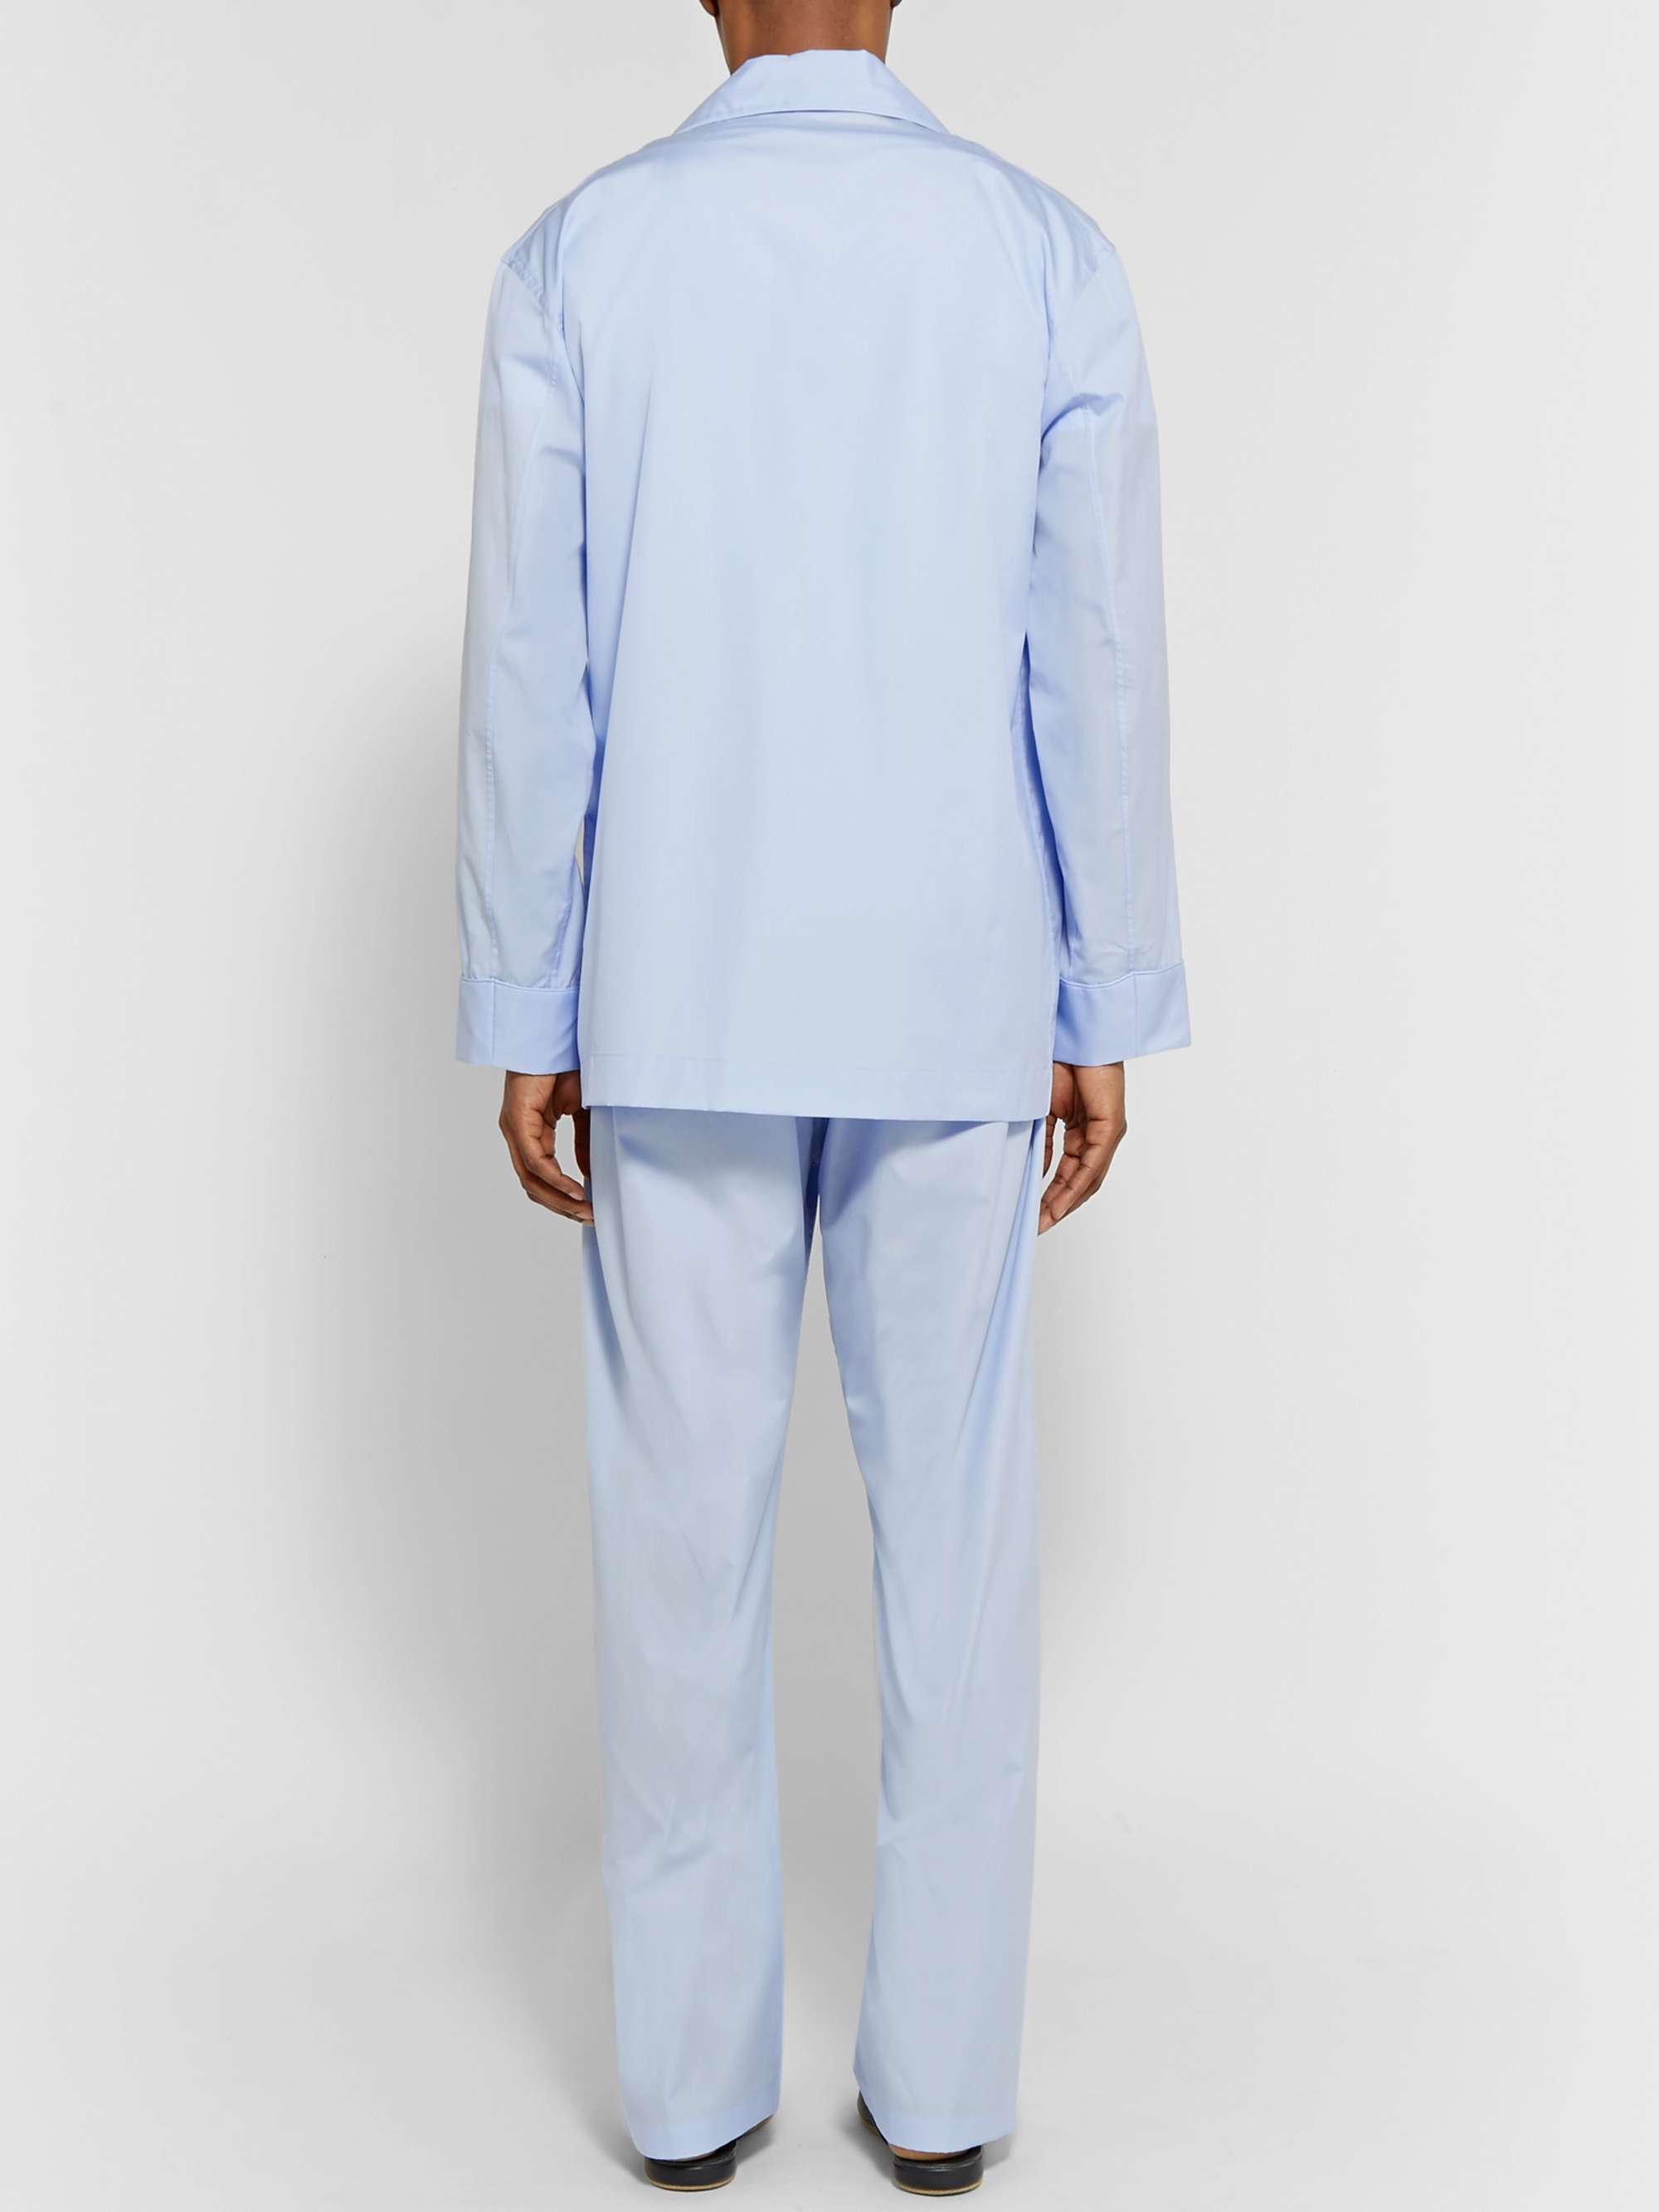 EMMA WILLIS Cotton-Poplin Pyjama Set for Men | MR PORTER